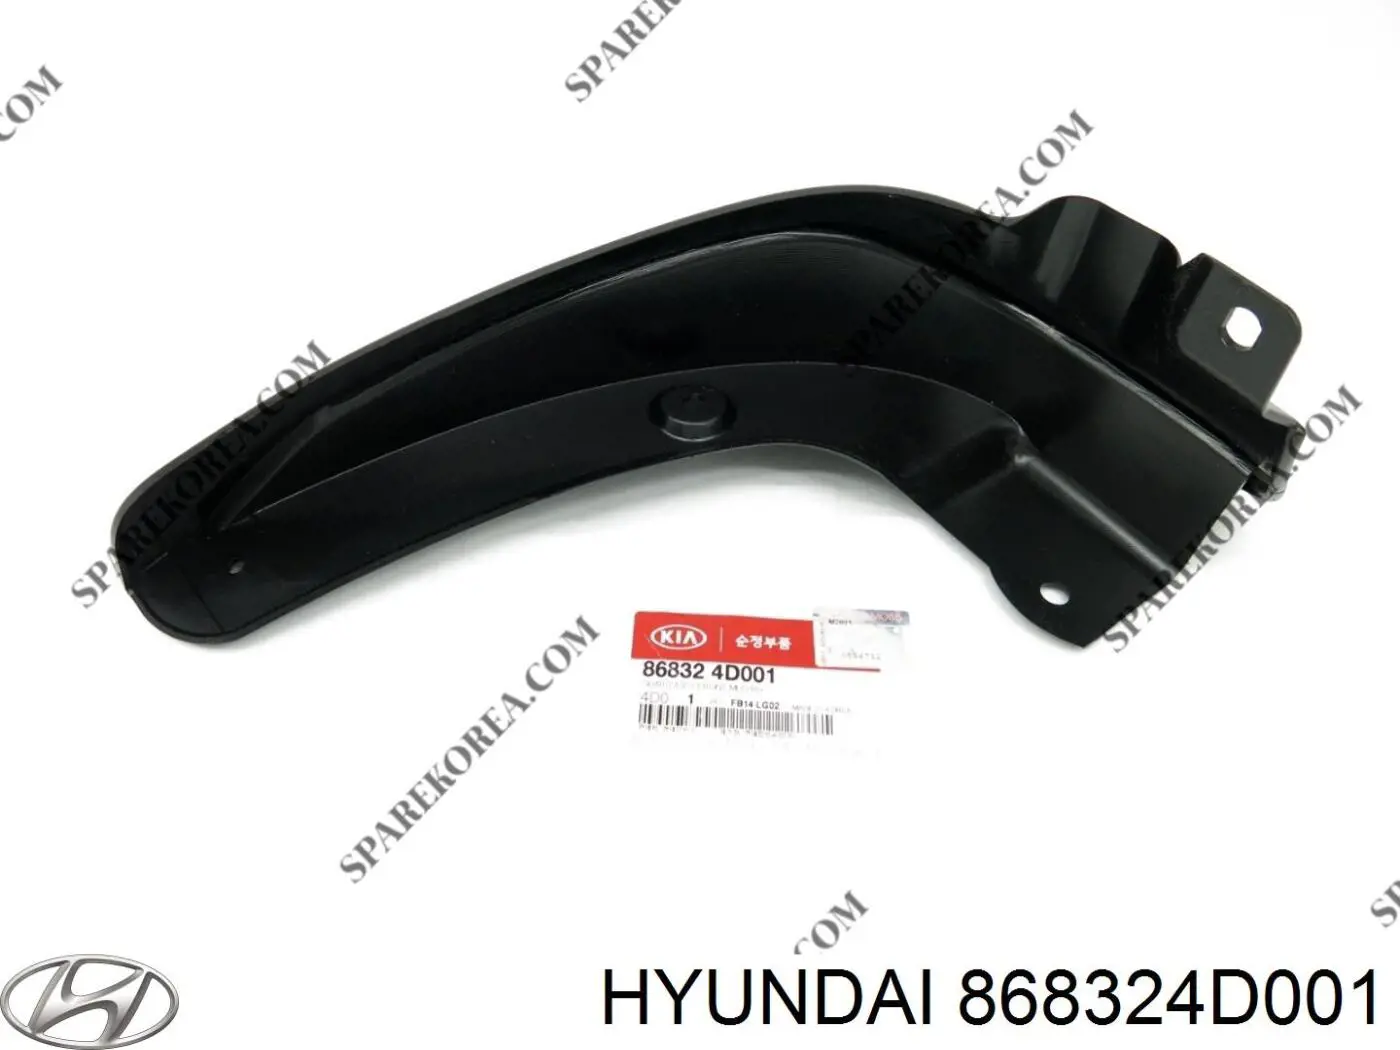 868324d001 Hyundai/Kia брызговик передний правый